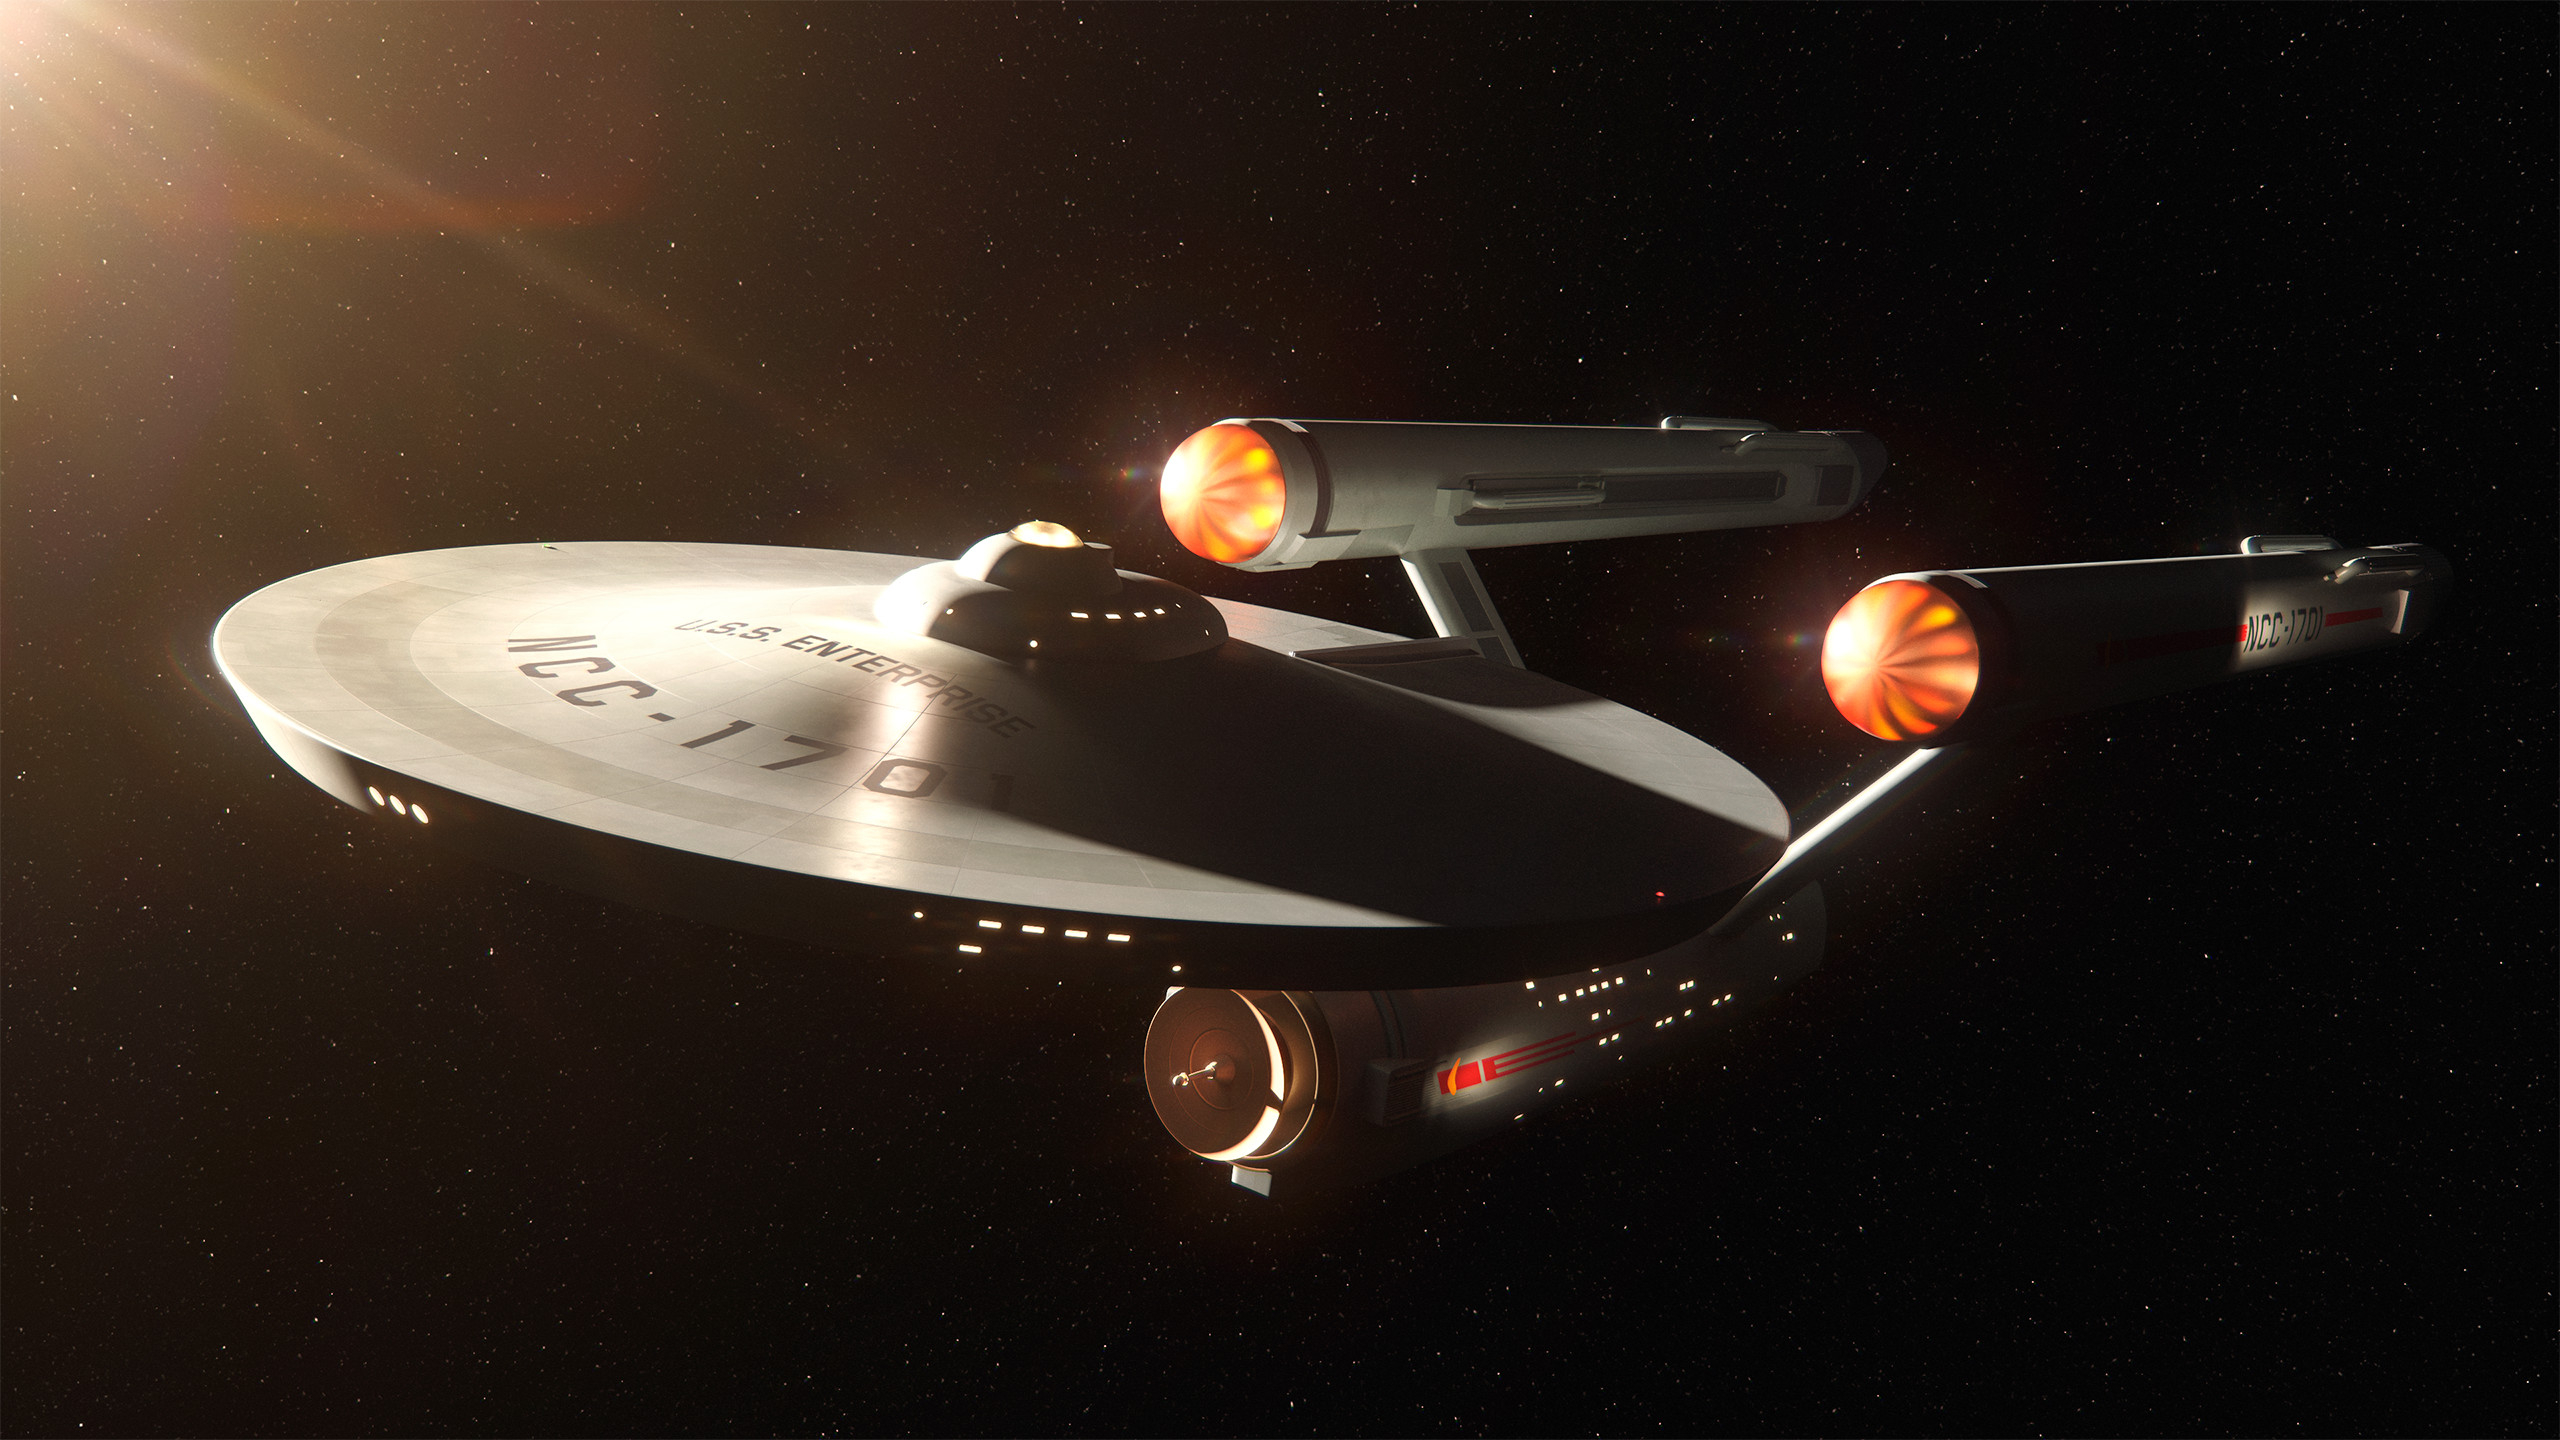 2560x1440 Star Trek, spaceship, vehicle, science fiction, CGI, digital art, USS Enterprise NCC-1701, Star Trek Ships | Wallpaper